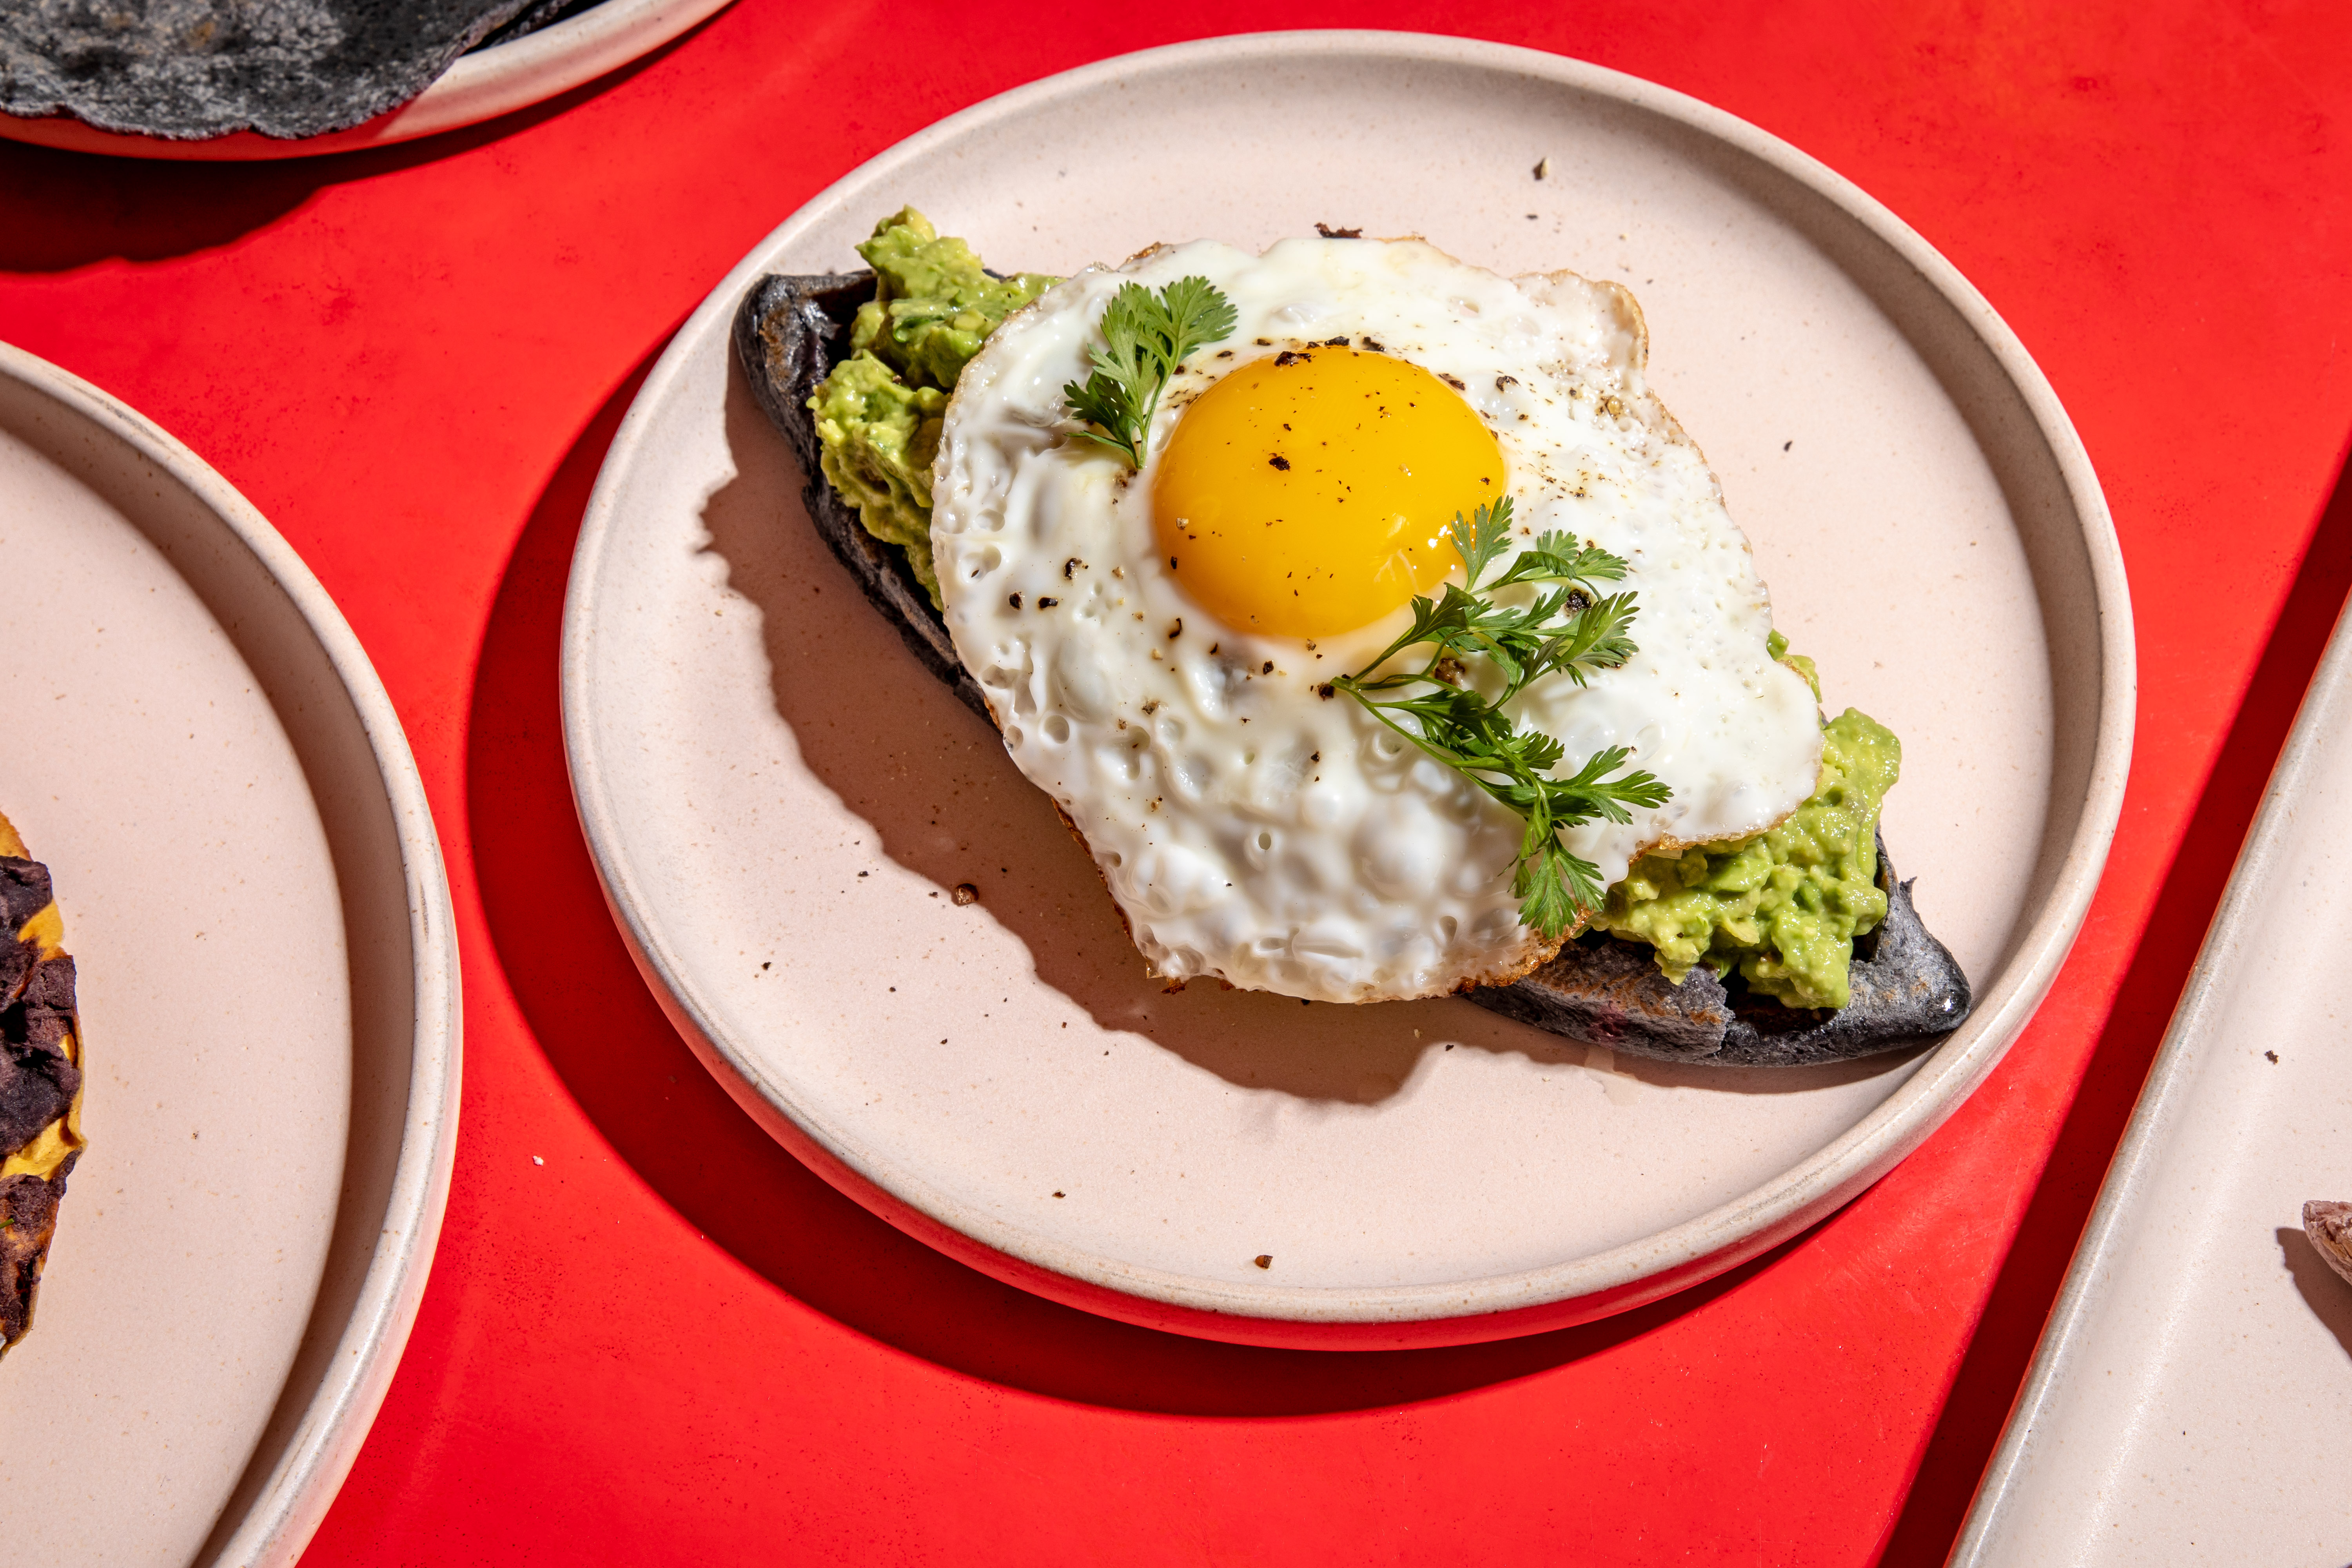 Sunnyside up egg sits atop an avocado memela on a white plate